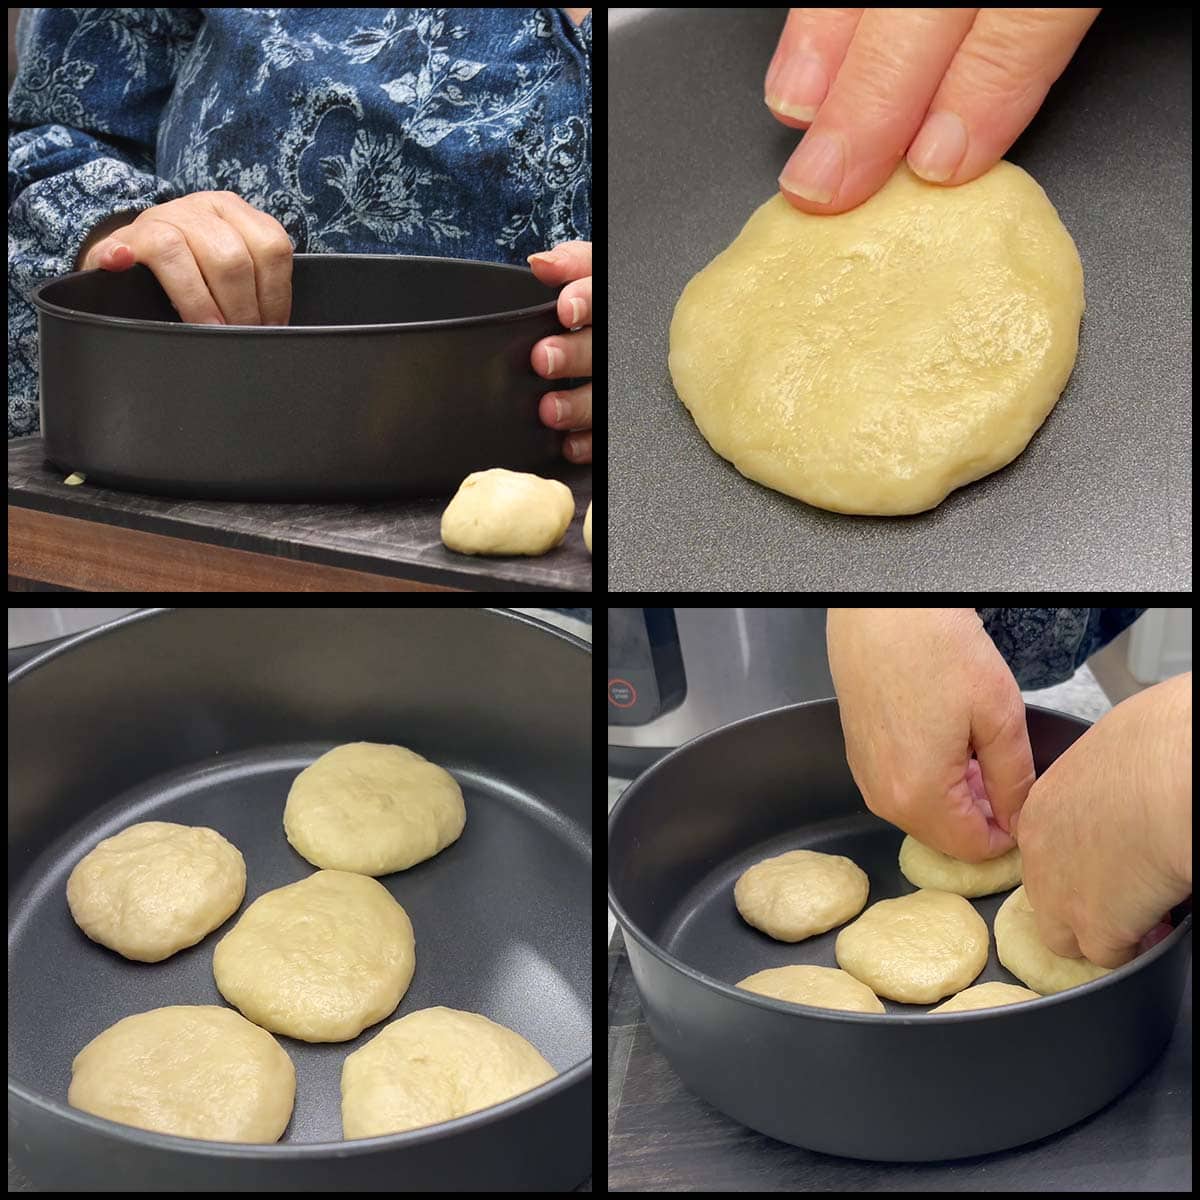 placing rolls in the Ninja pan.